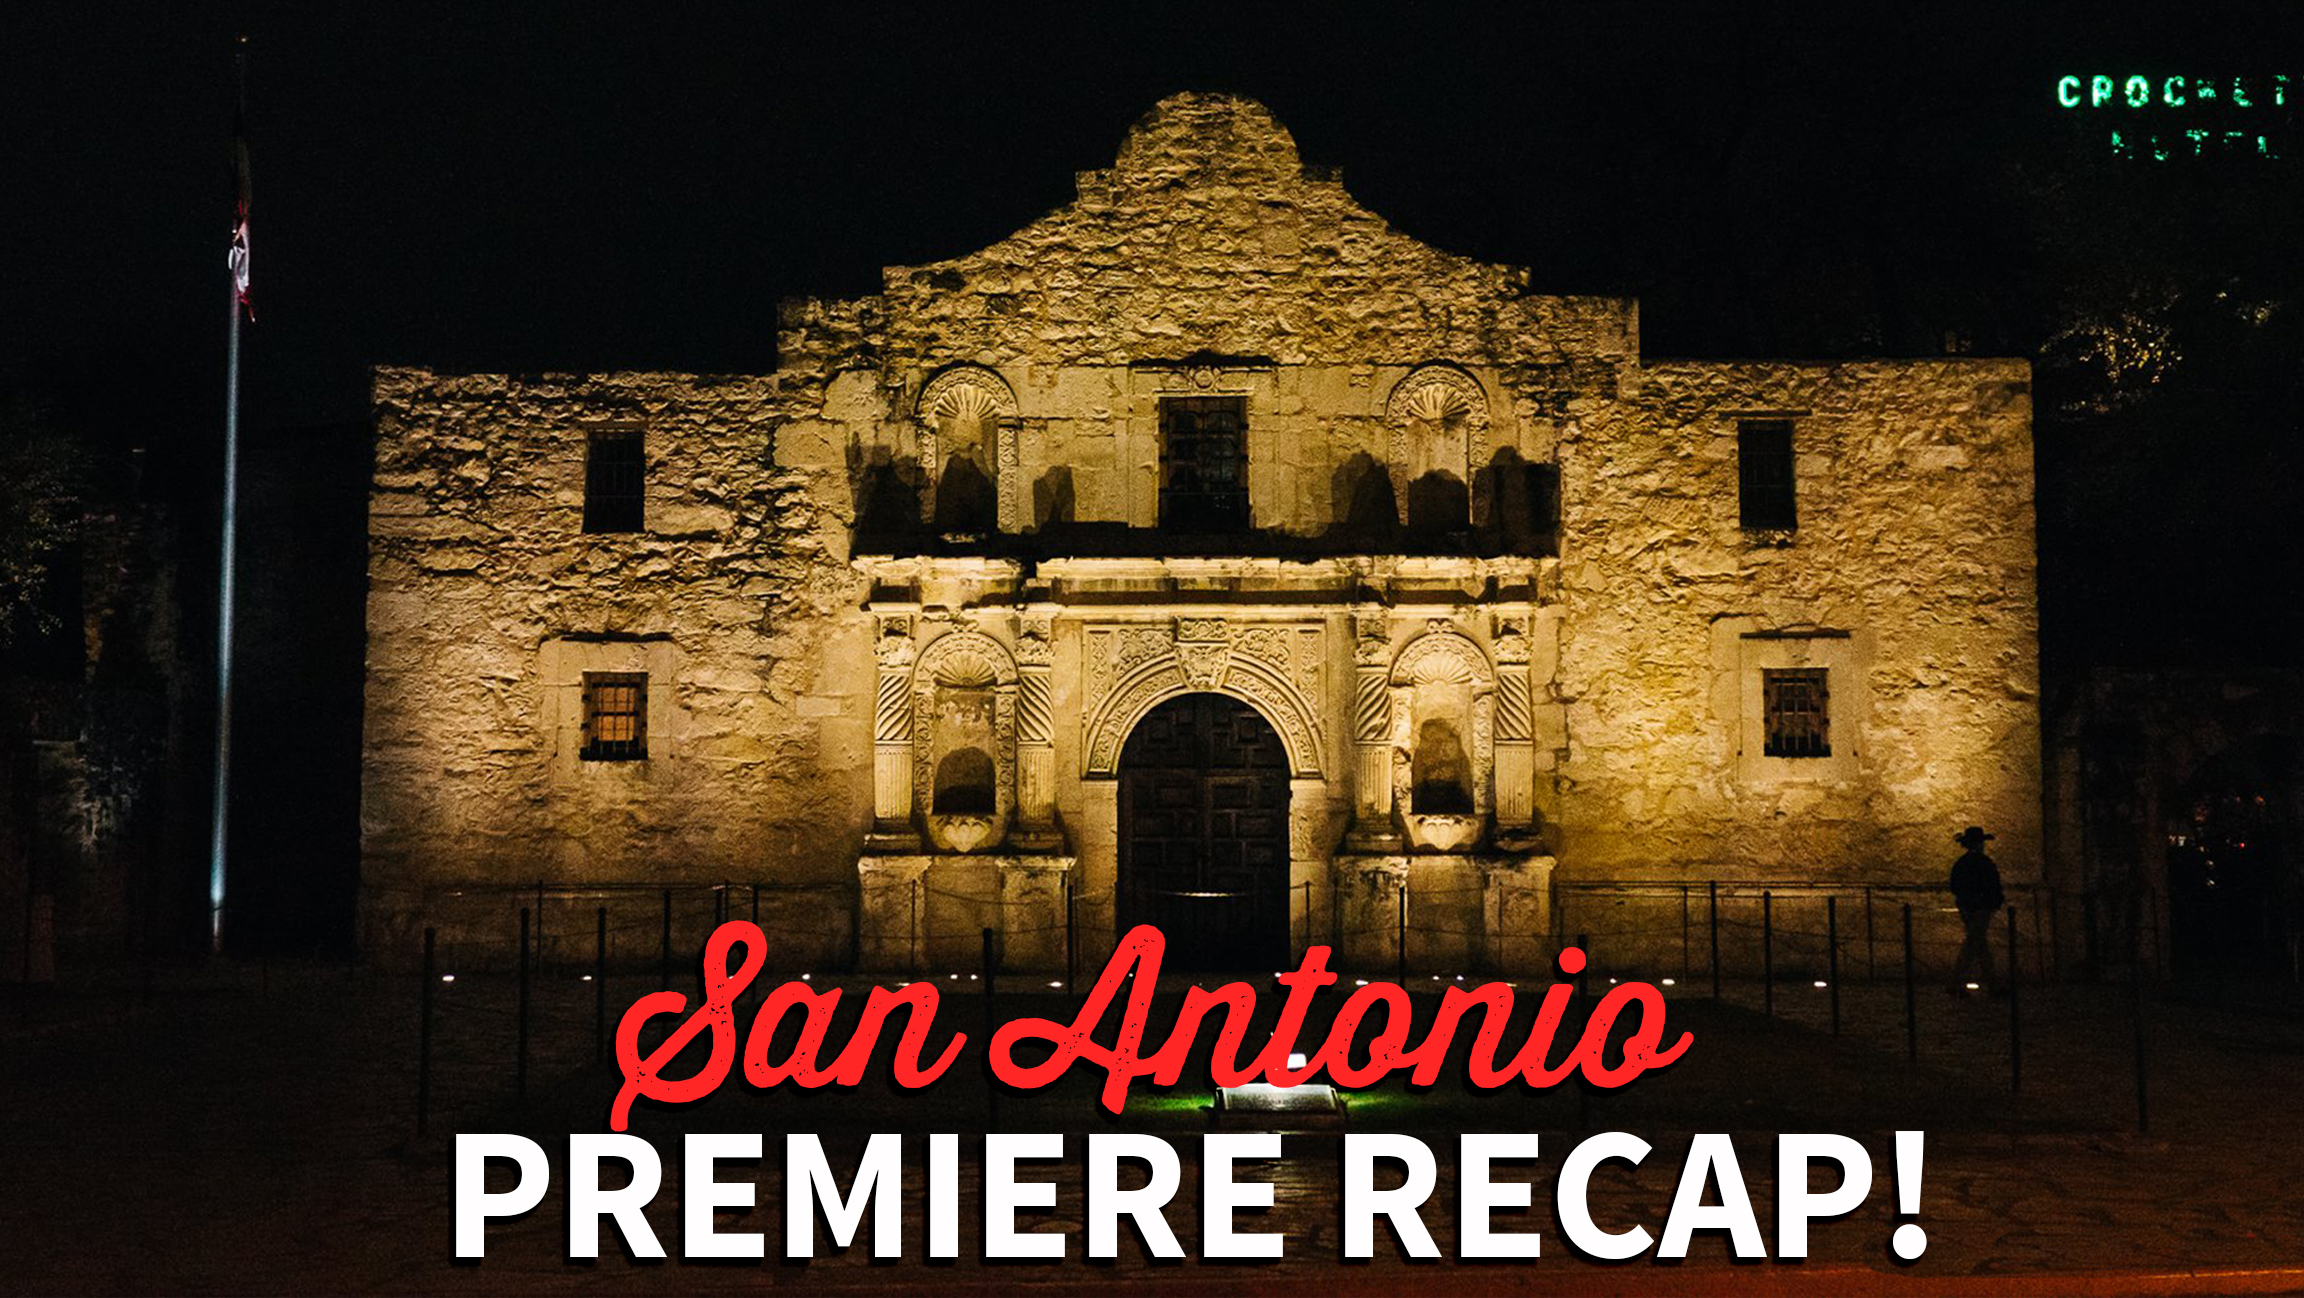 San Antonio Premiere Recap! The Daytripper